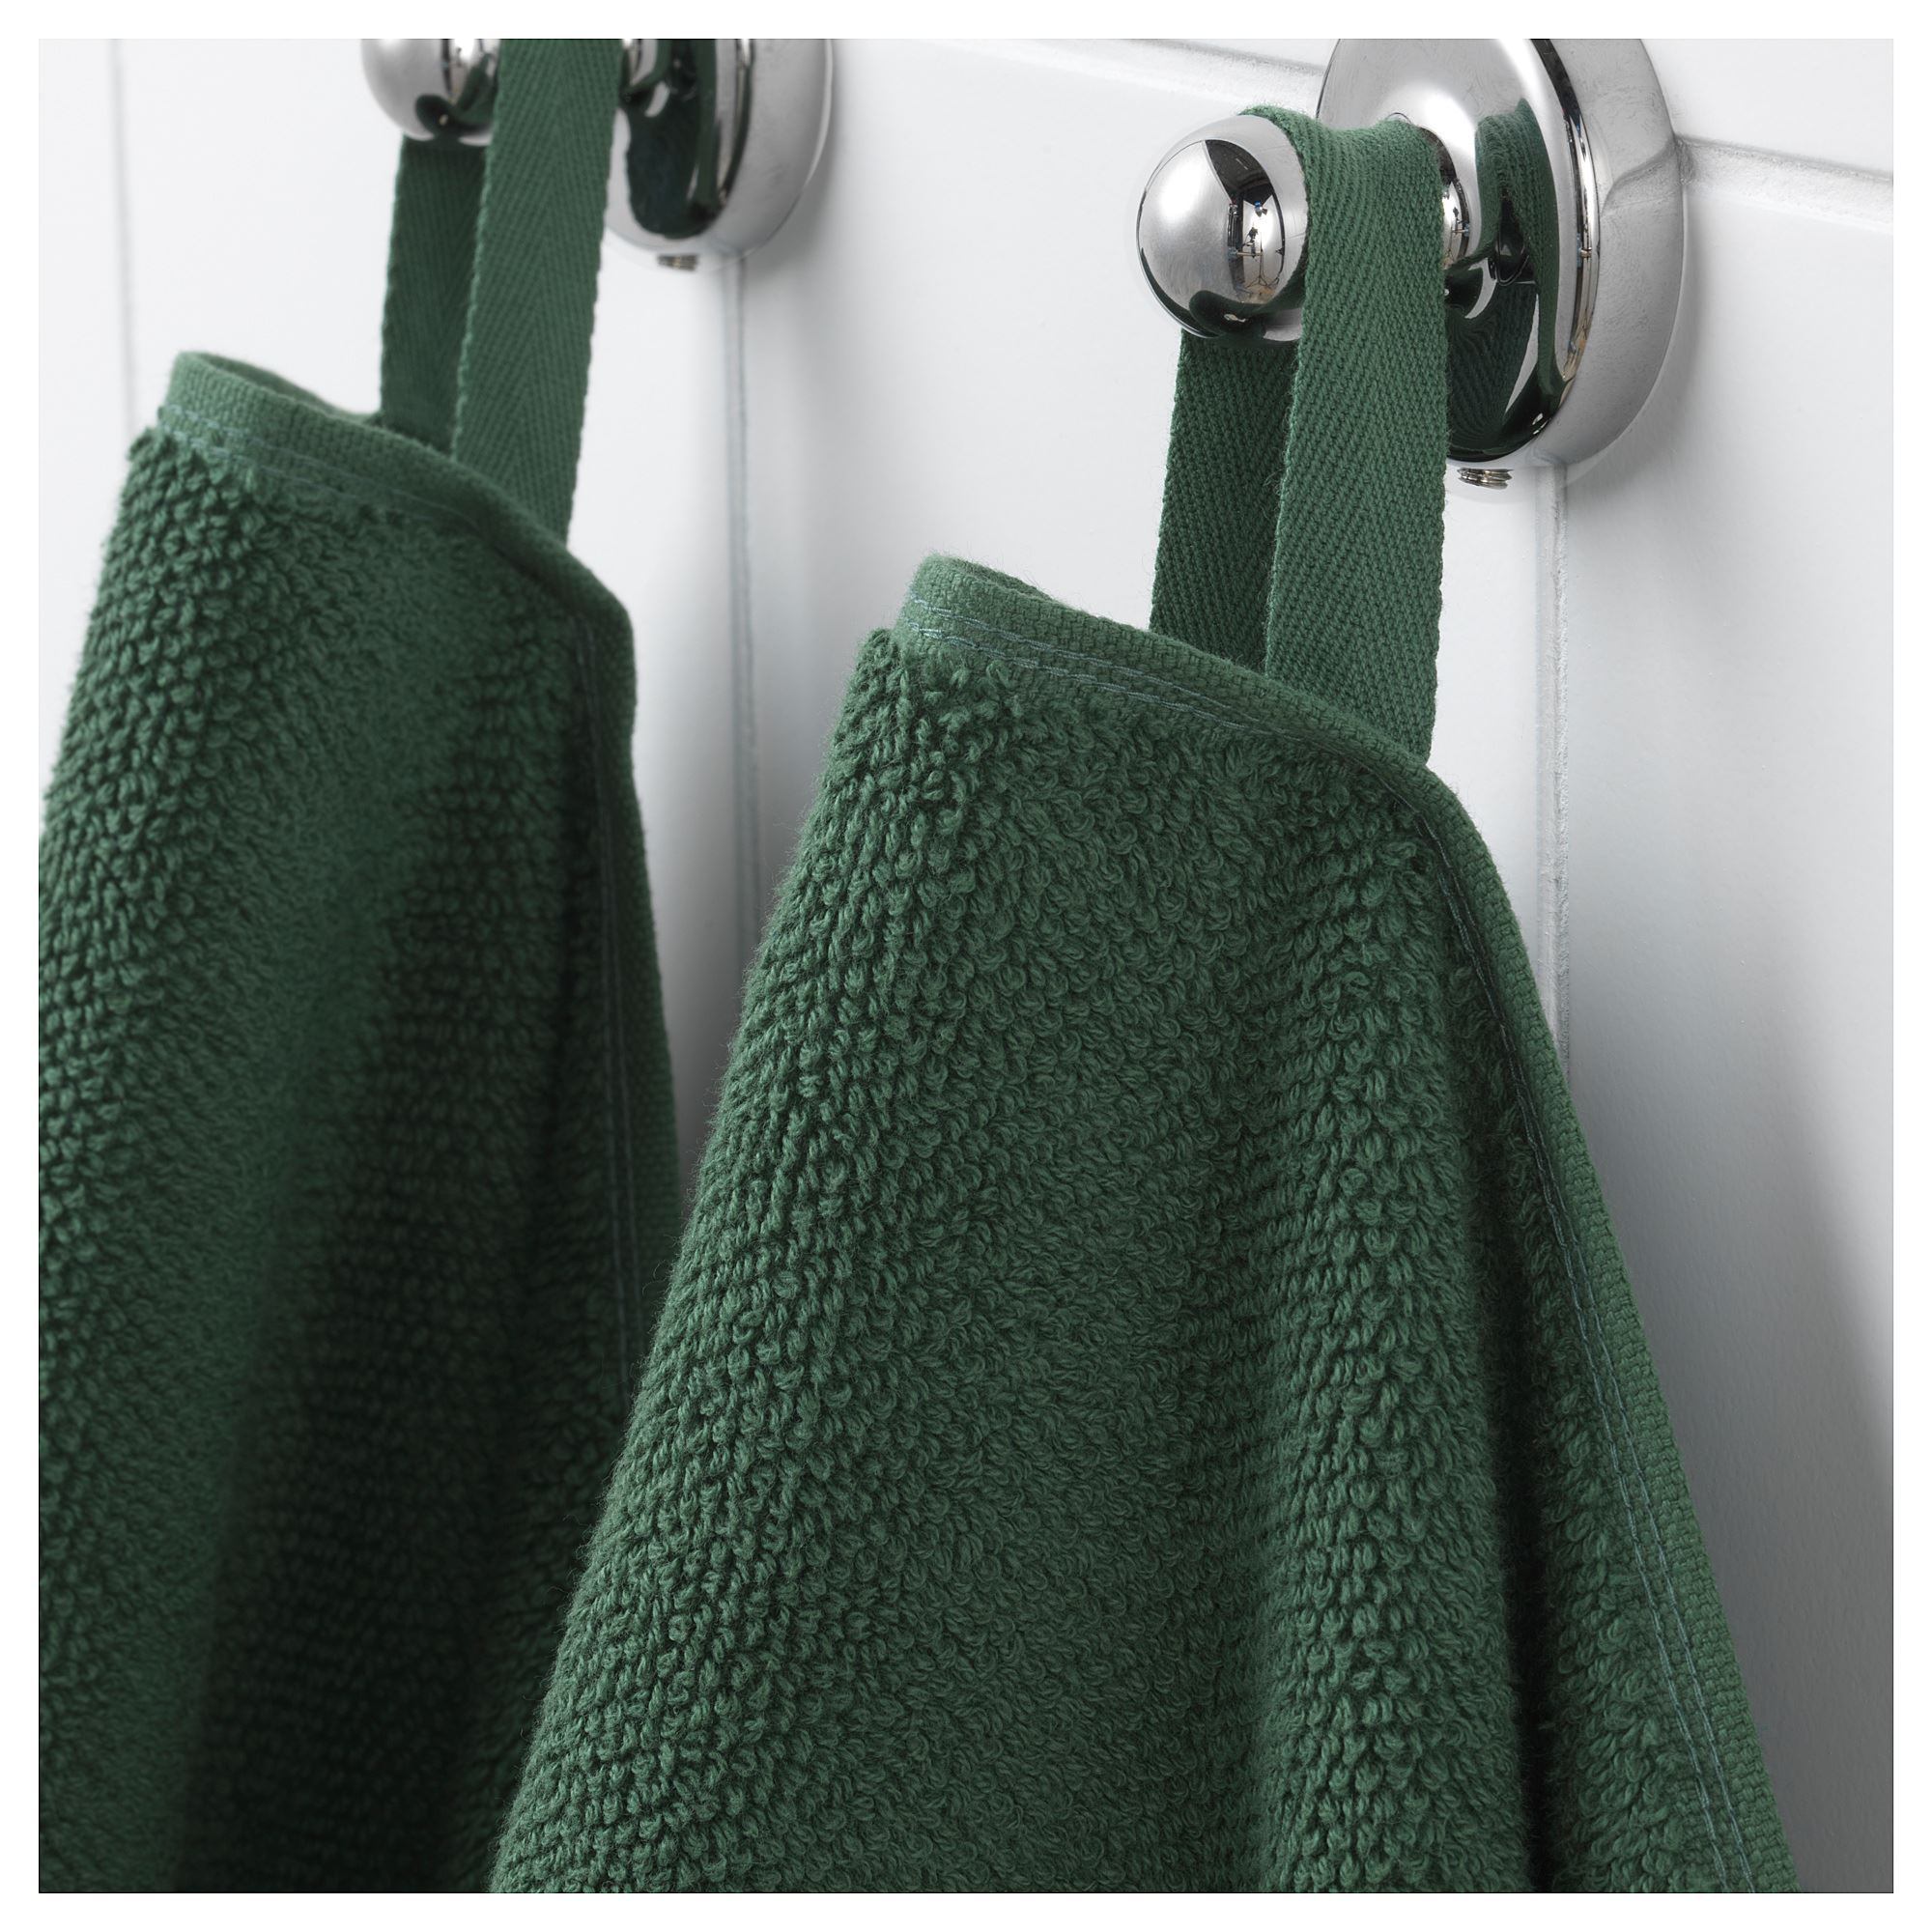 VIKFJARD hand towel green 40x70 cm  IKEA Bathroom